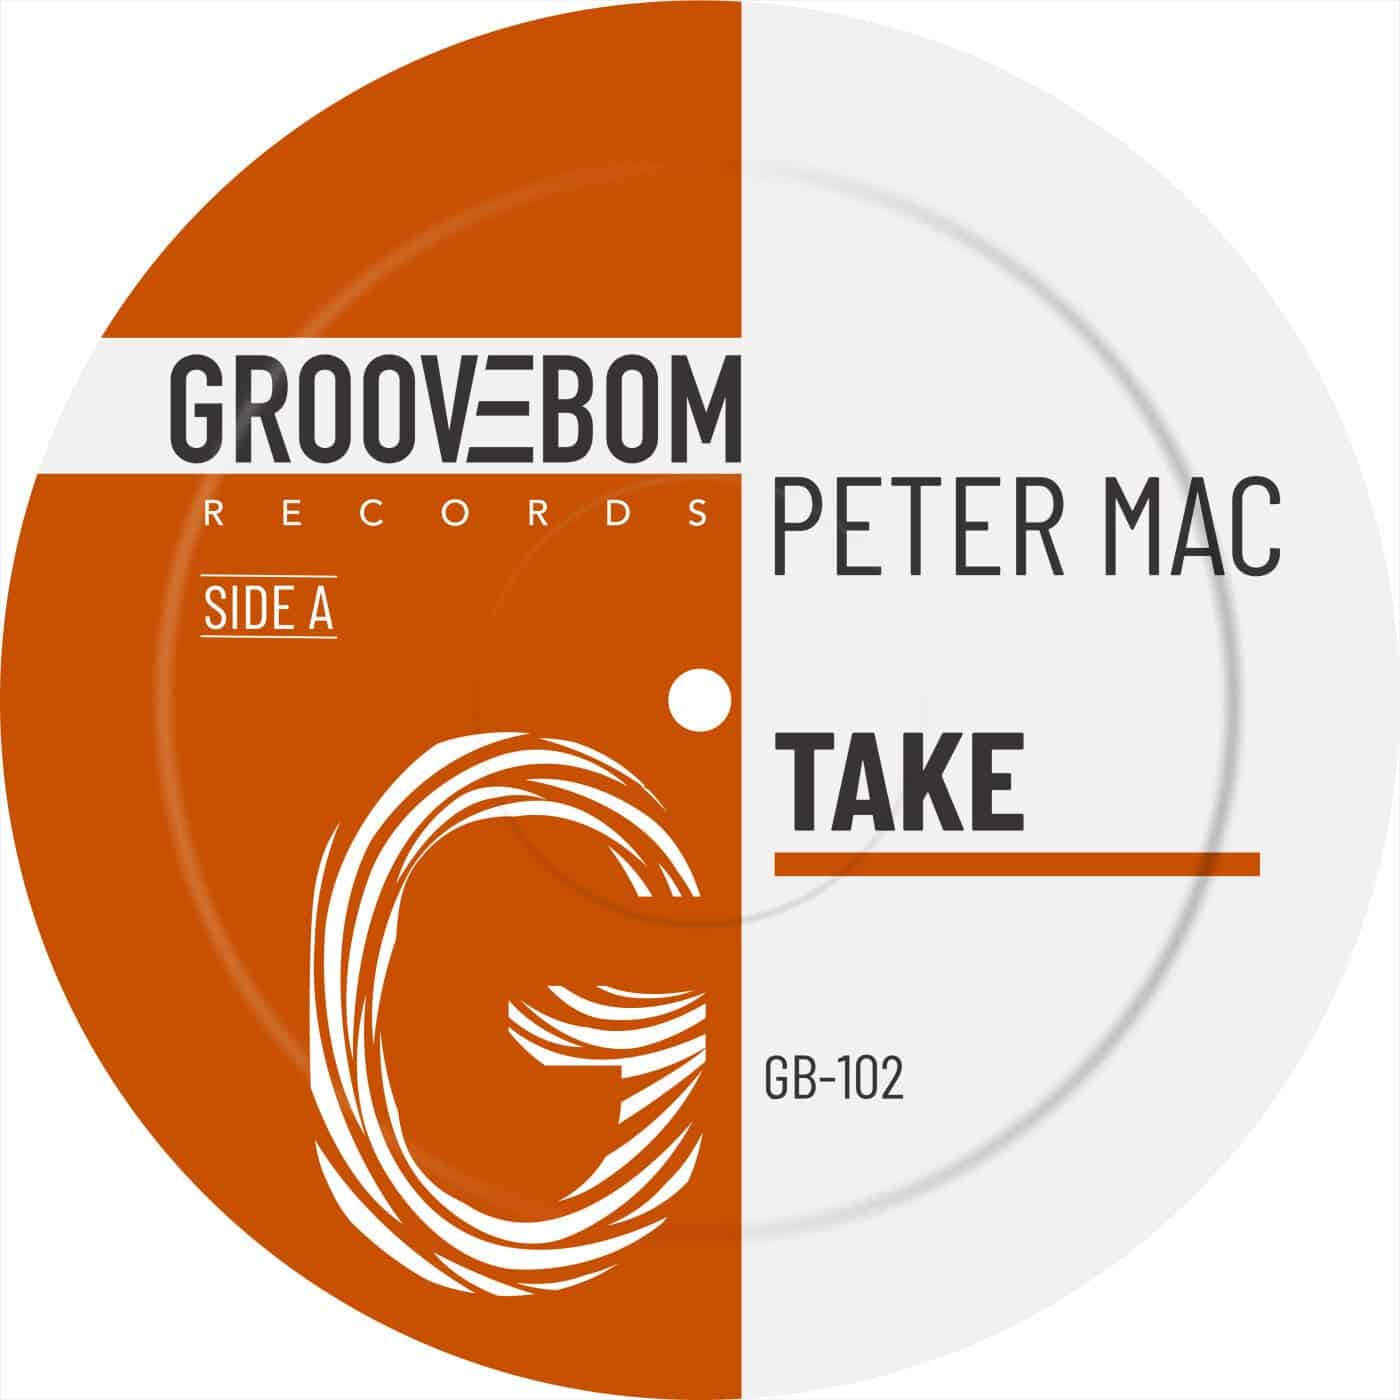 Download Peter Mac - Take on Electrobuzz